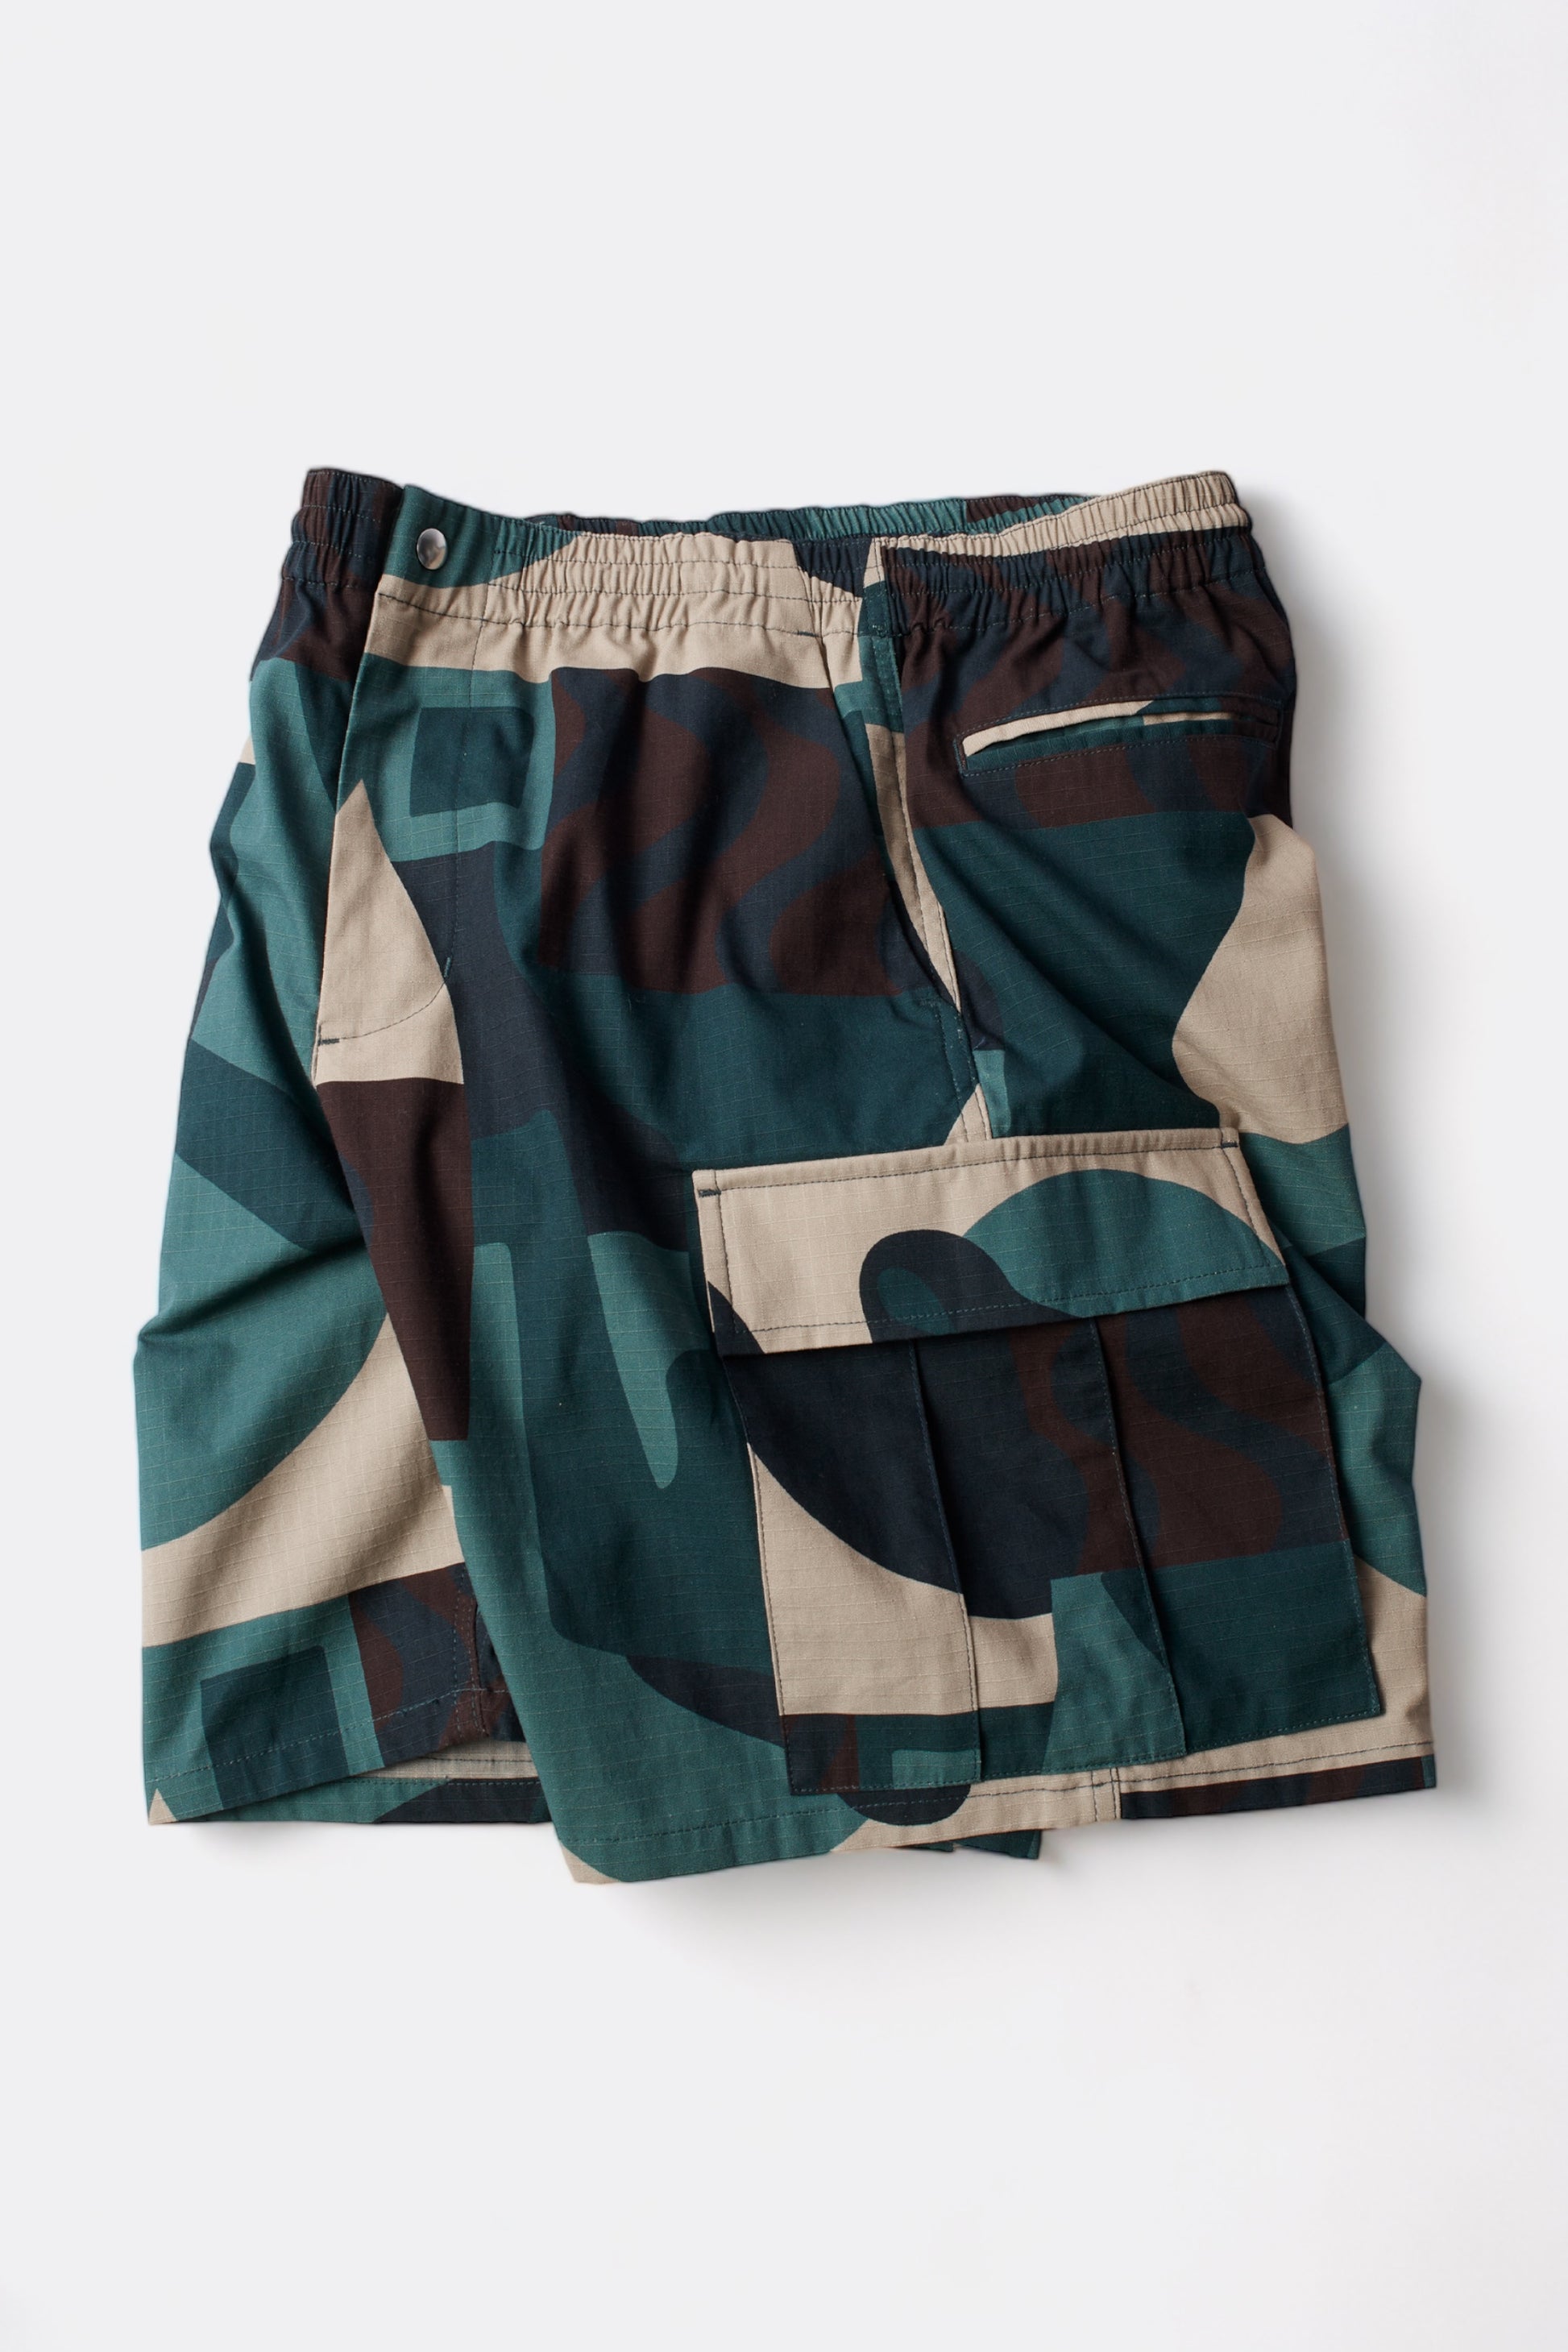 Parra - Distorted Camo Shorts (Green)